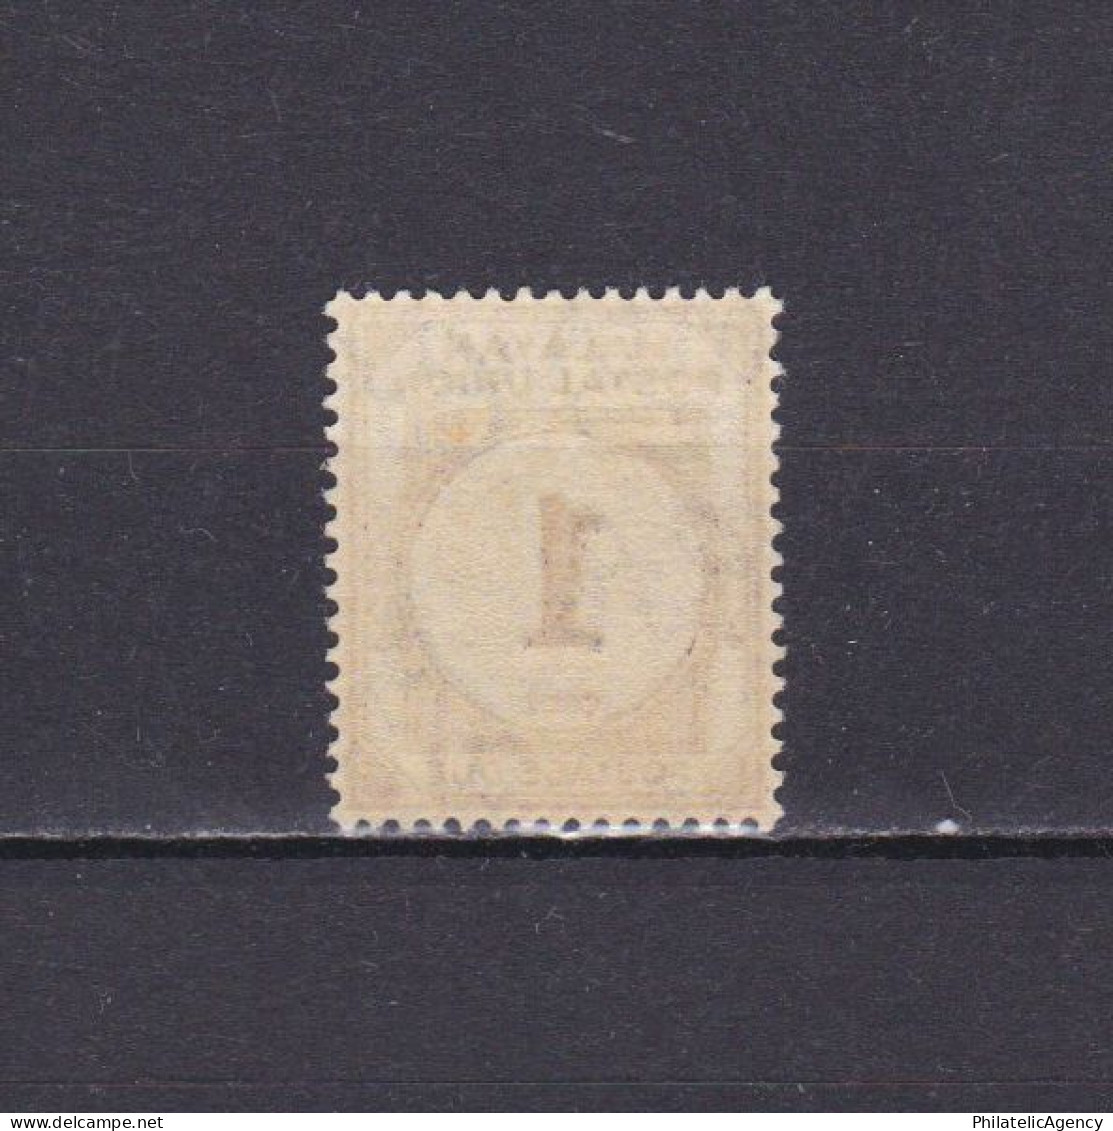 MALAYSIA 1945, SG #D7, Postage Due, Wmk Script CA, Perf 15×14, MH - Malayan Postal Union